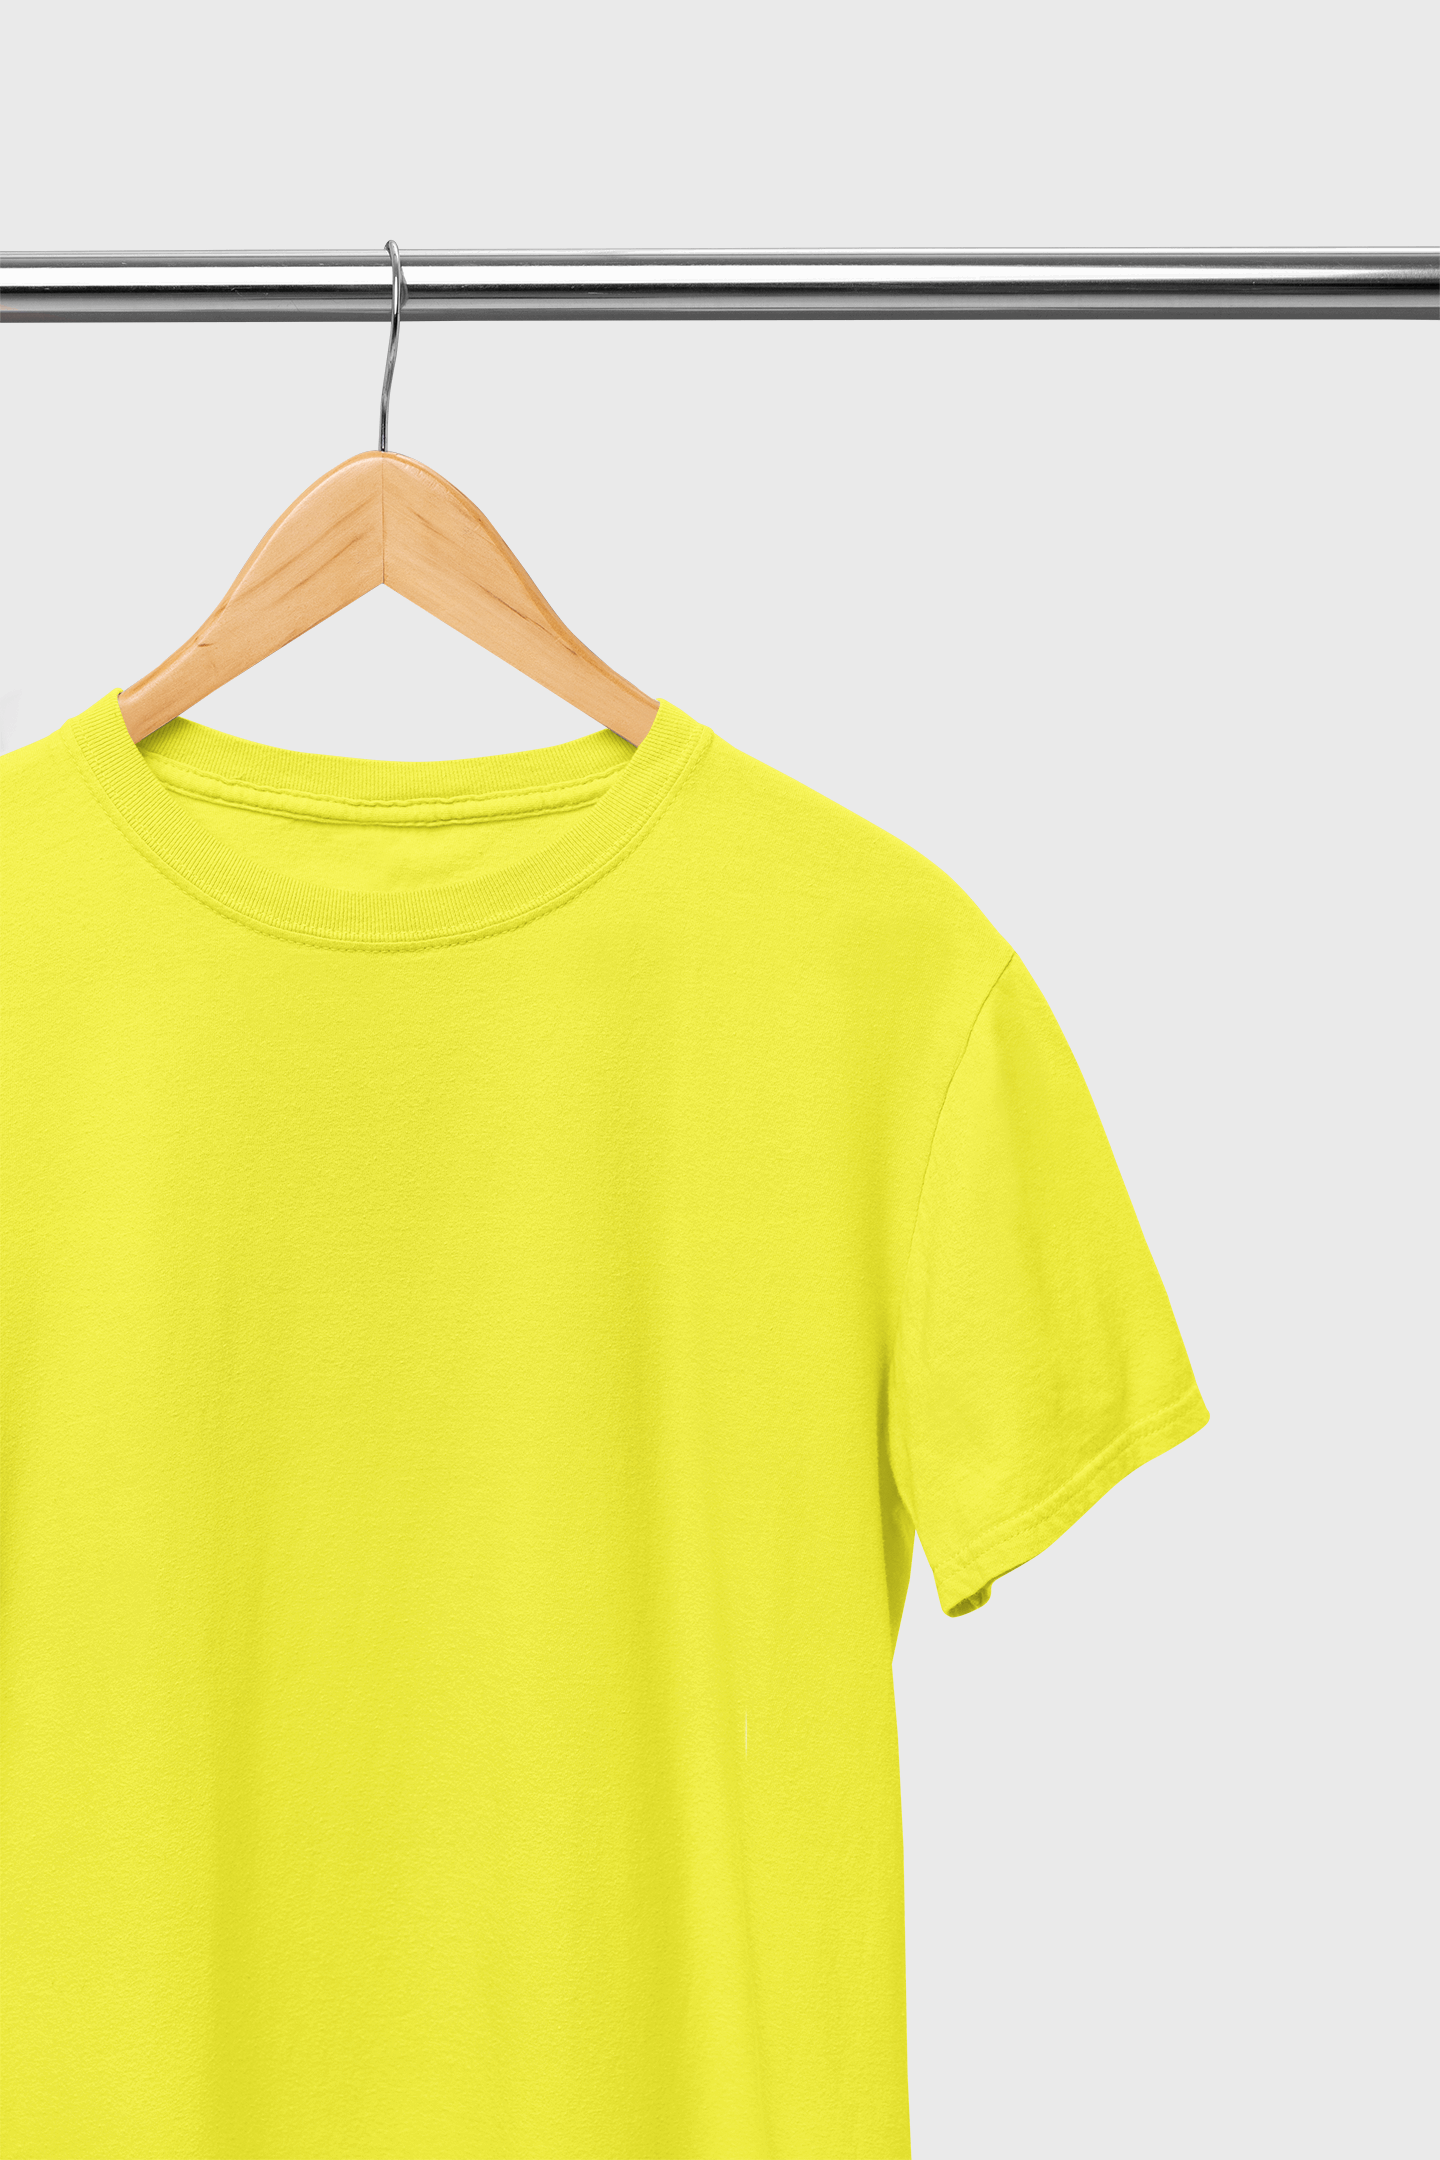 Yellow Men's Pure Cotton Round Neck Plain T-Shirt (Regular Fit)